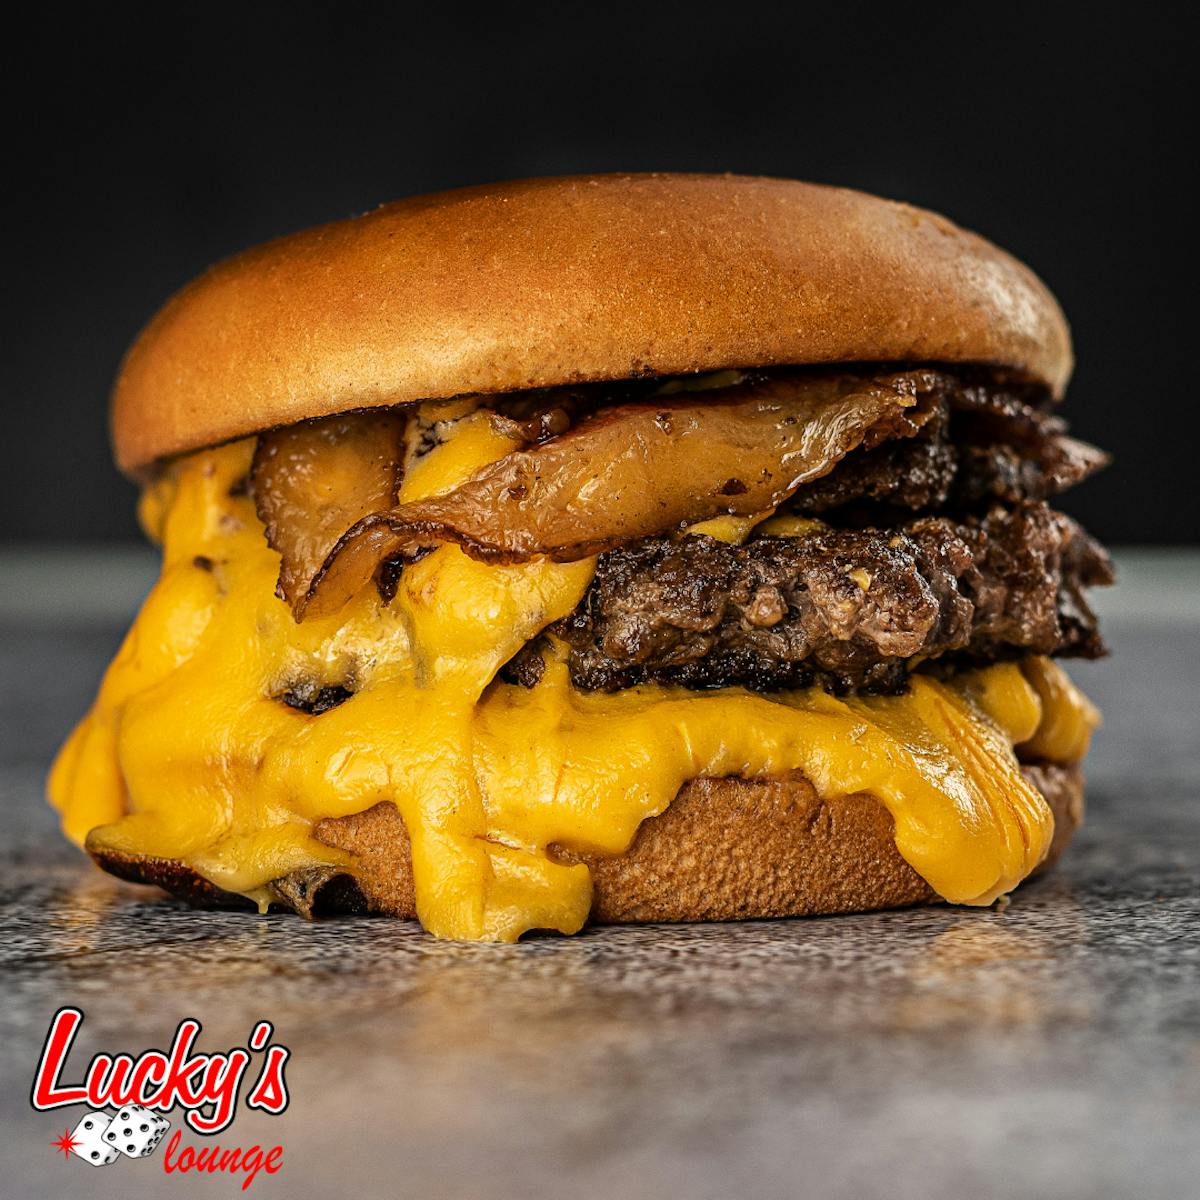 smash burger at lucky's lounge